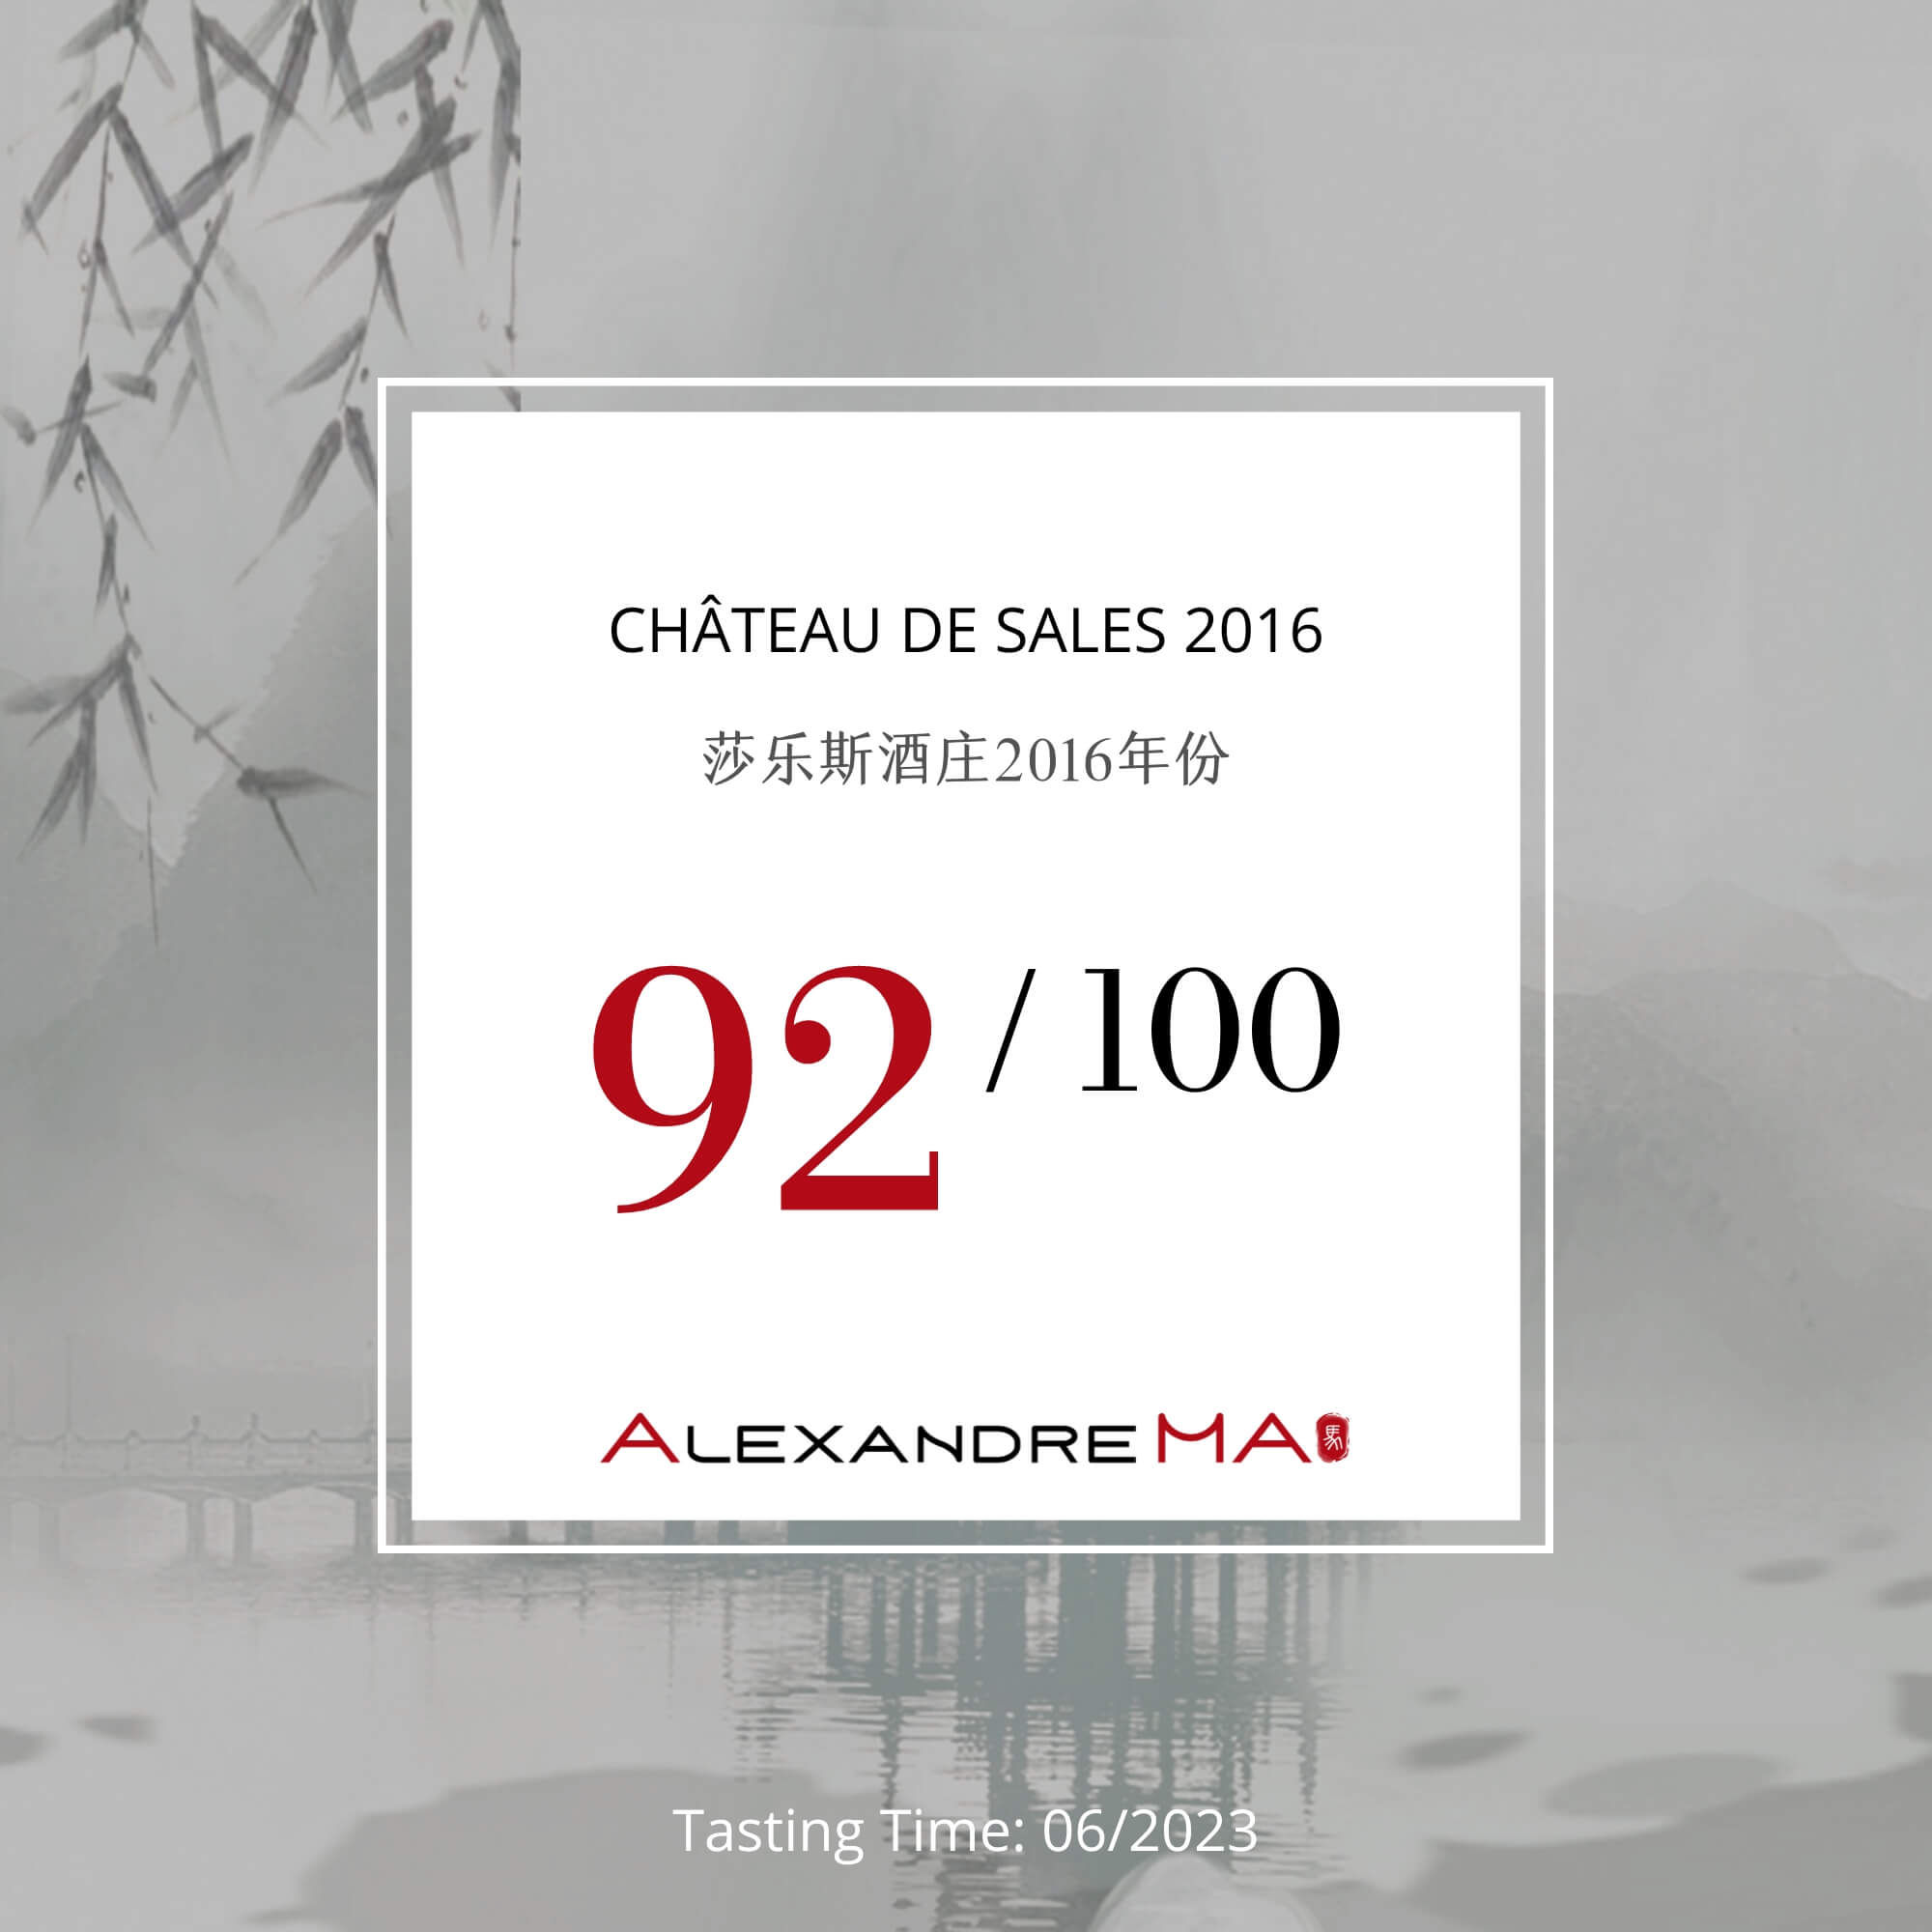 Château de Sales 2016 - Alexandre MA